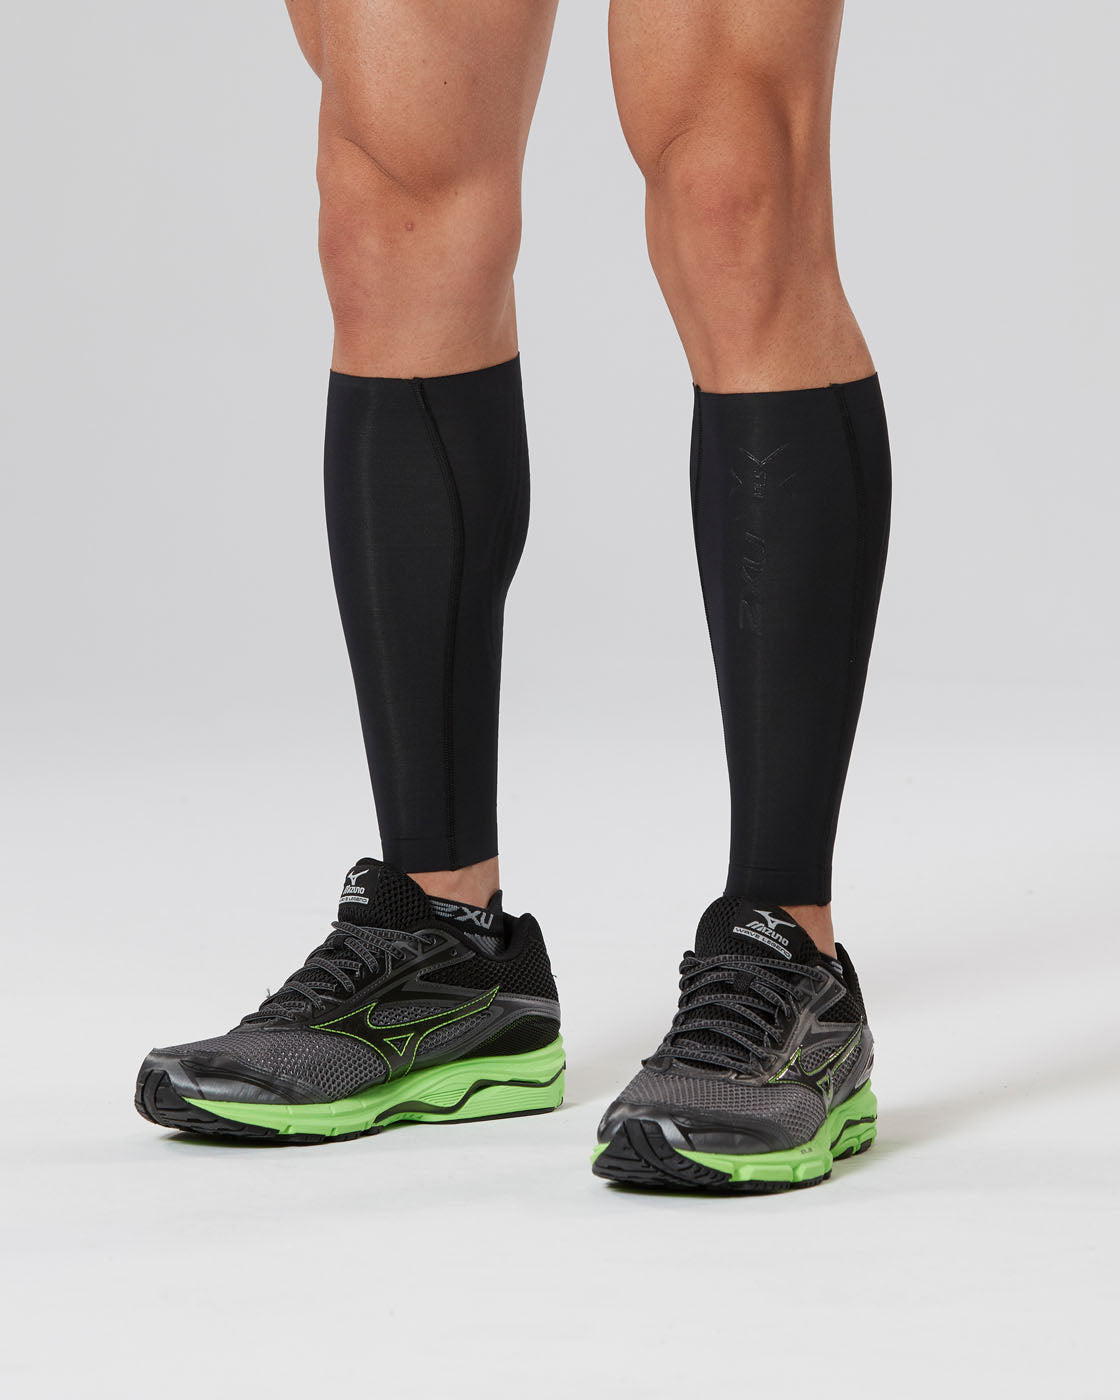 Generic 2x Calf Compression Sleeves Sock Leg Wrap Shin Splint